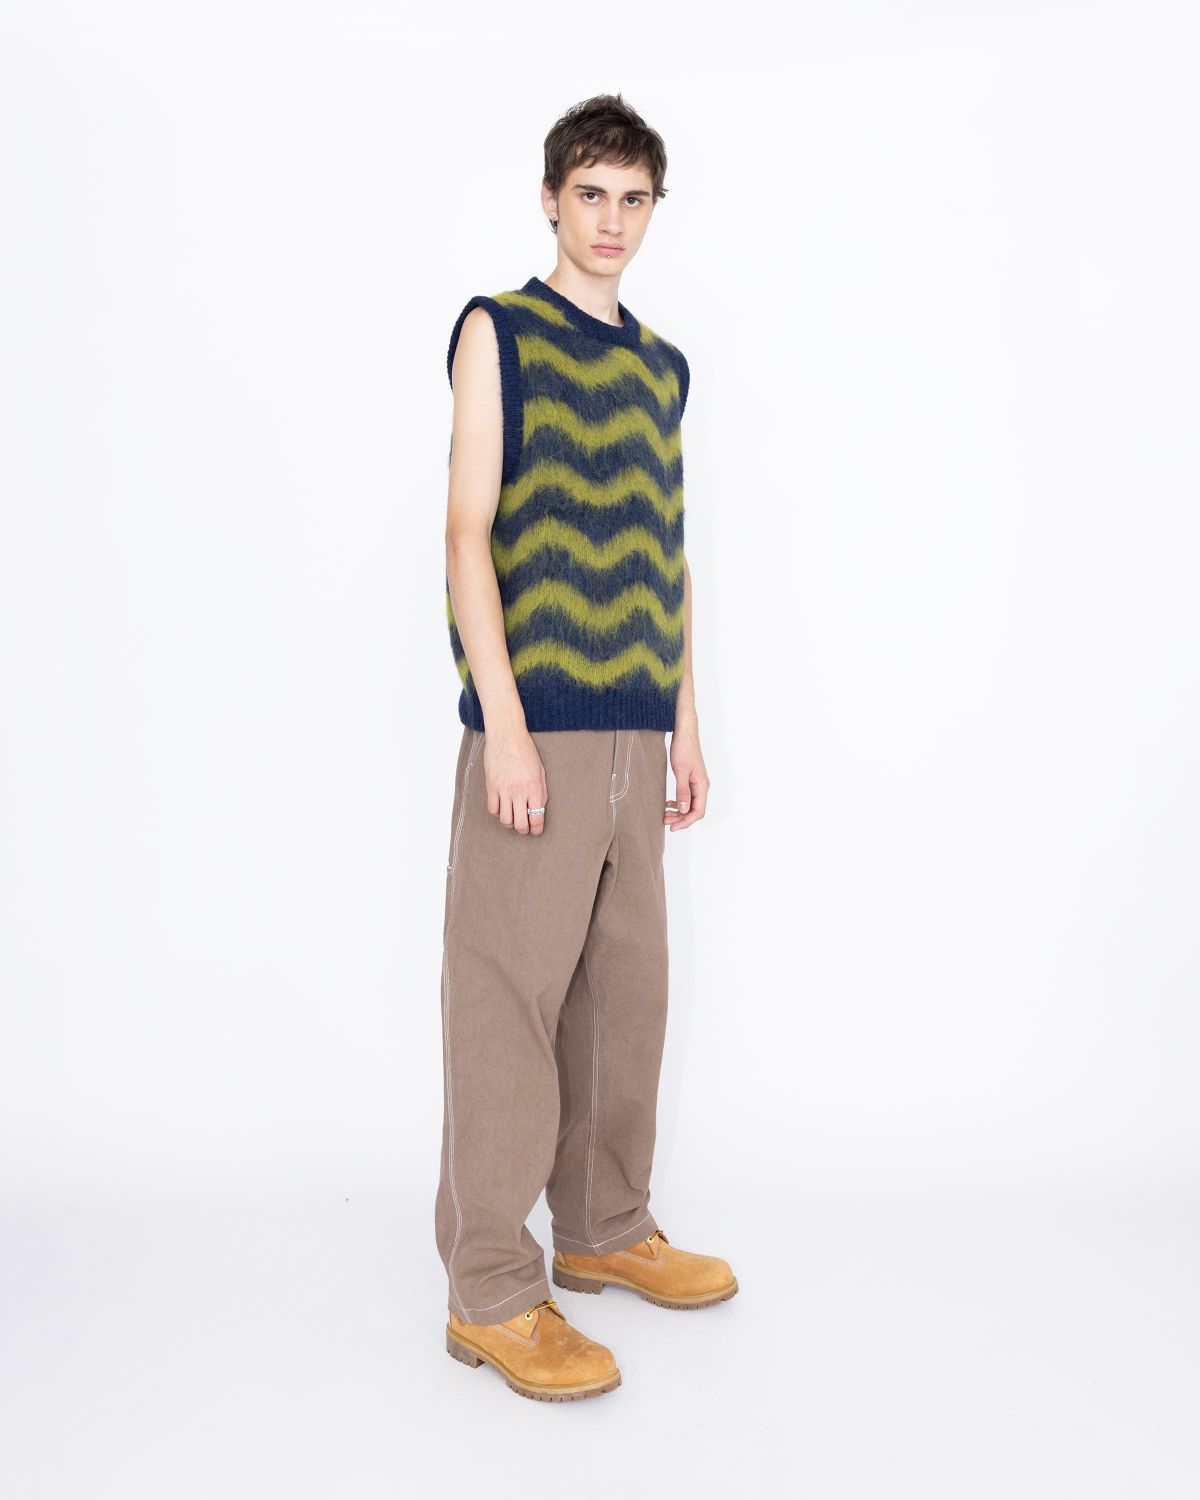 Highsnobiety HS05 – Alpaca Fuzzy Wave Sweater Vest Navy/Olive green - Knitwear - Multi - Image 4